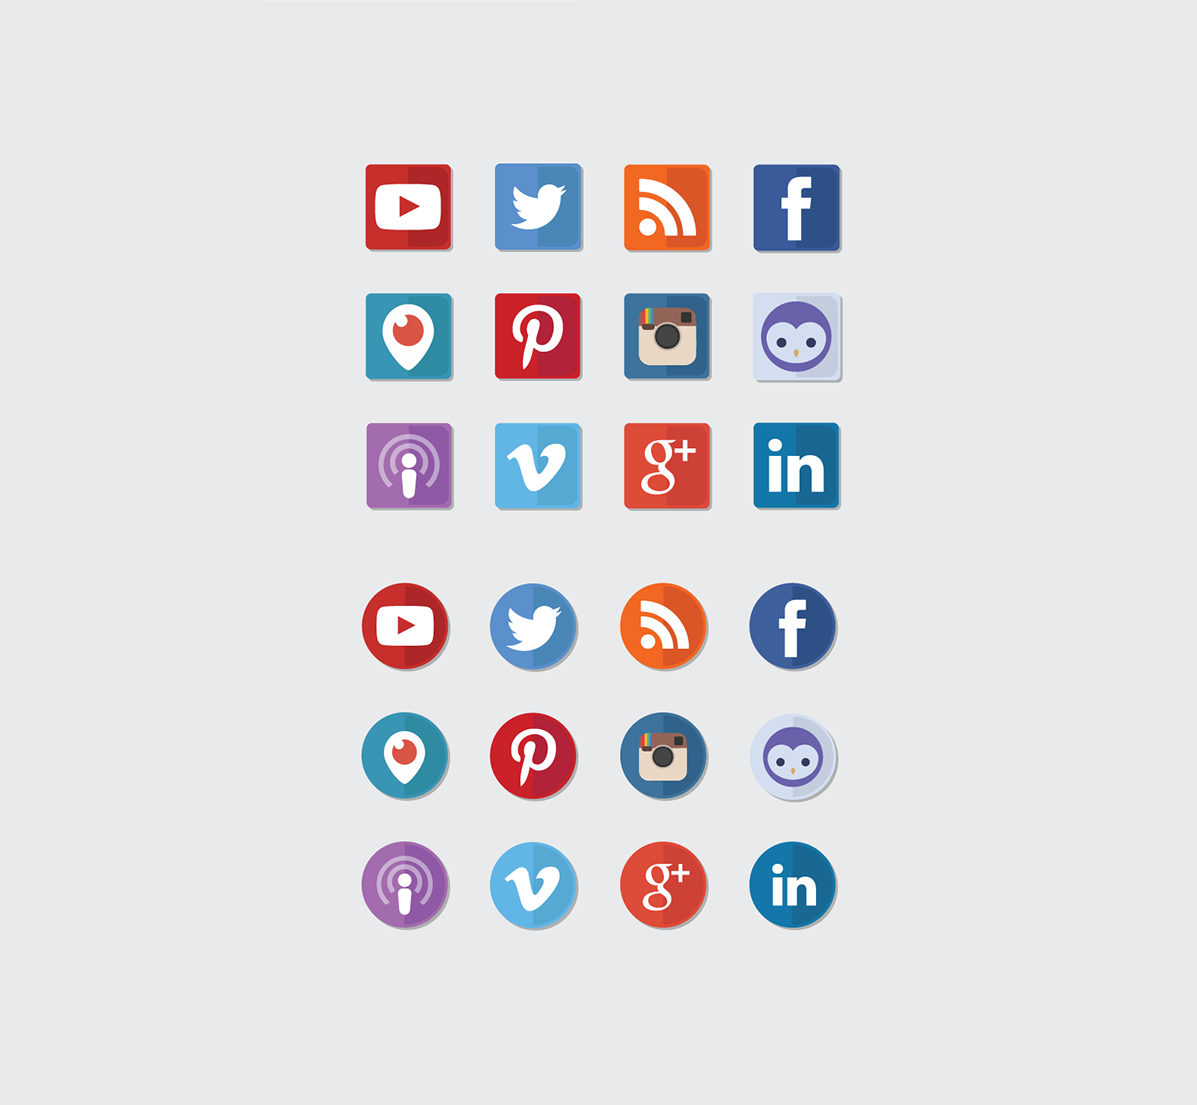 Free Social Media Icons - Two Tones Circles and Squares